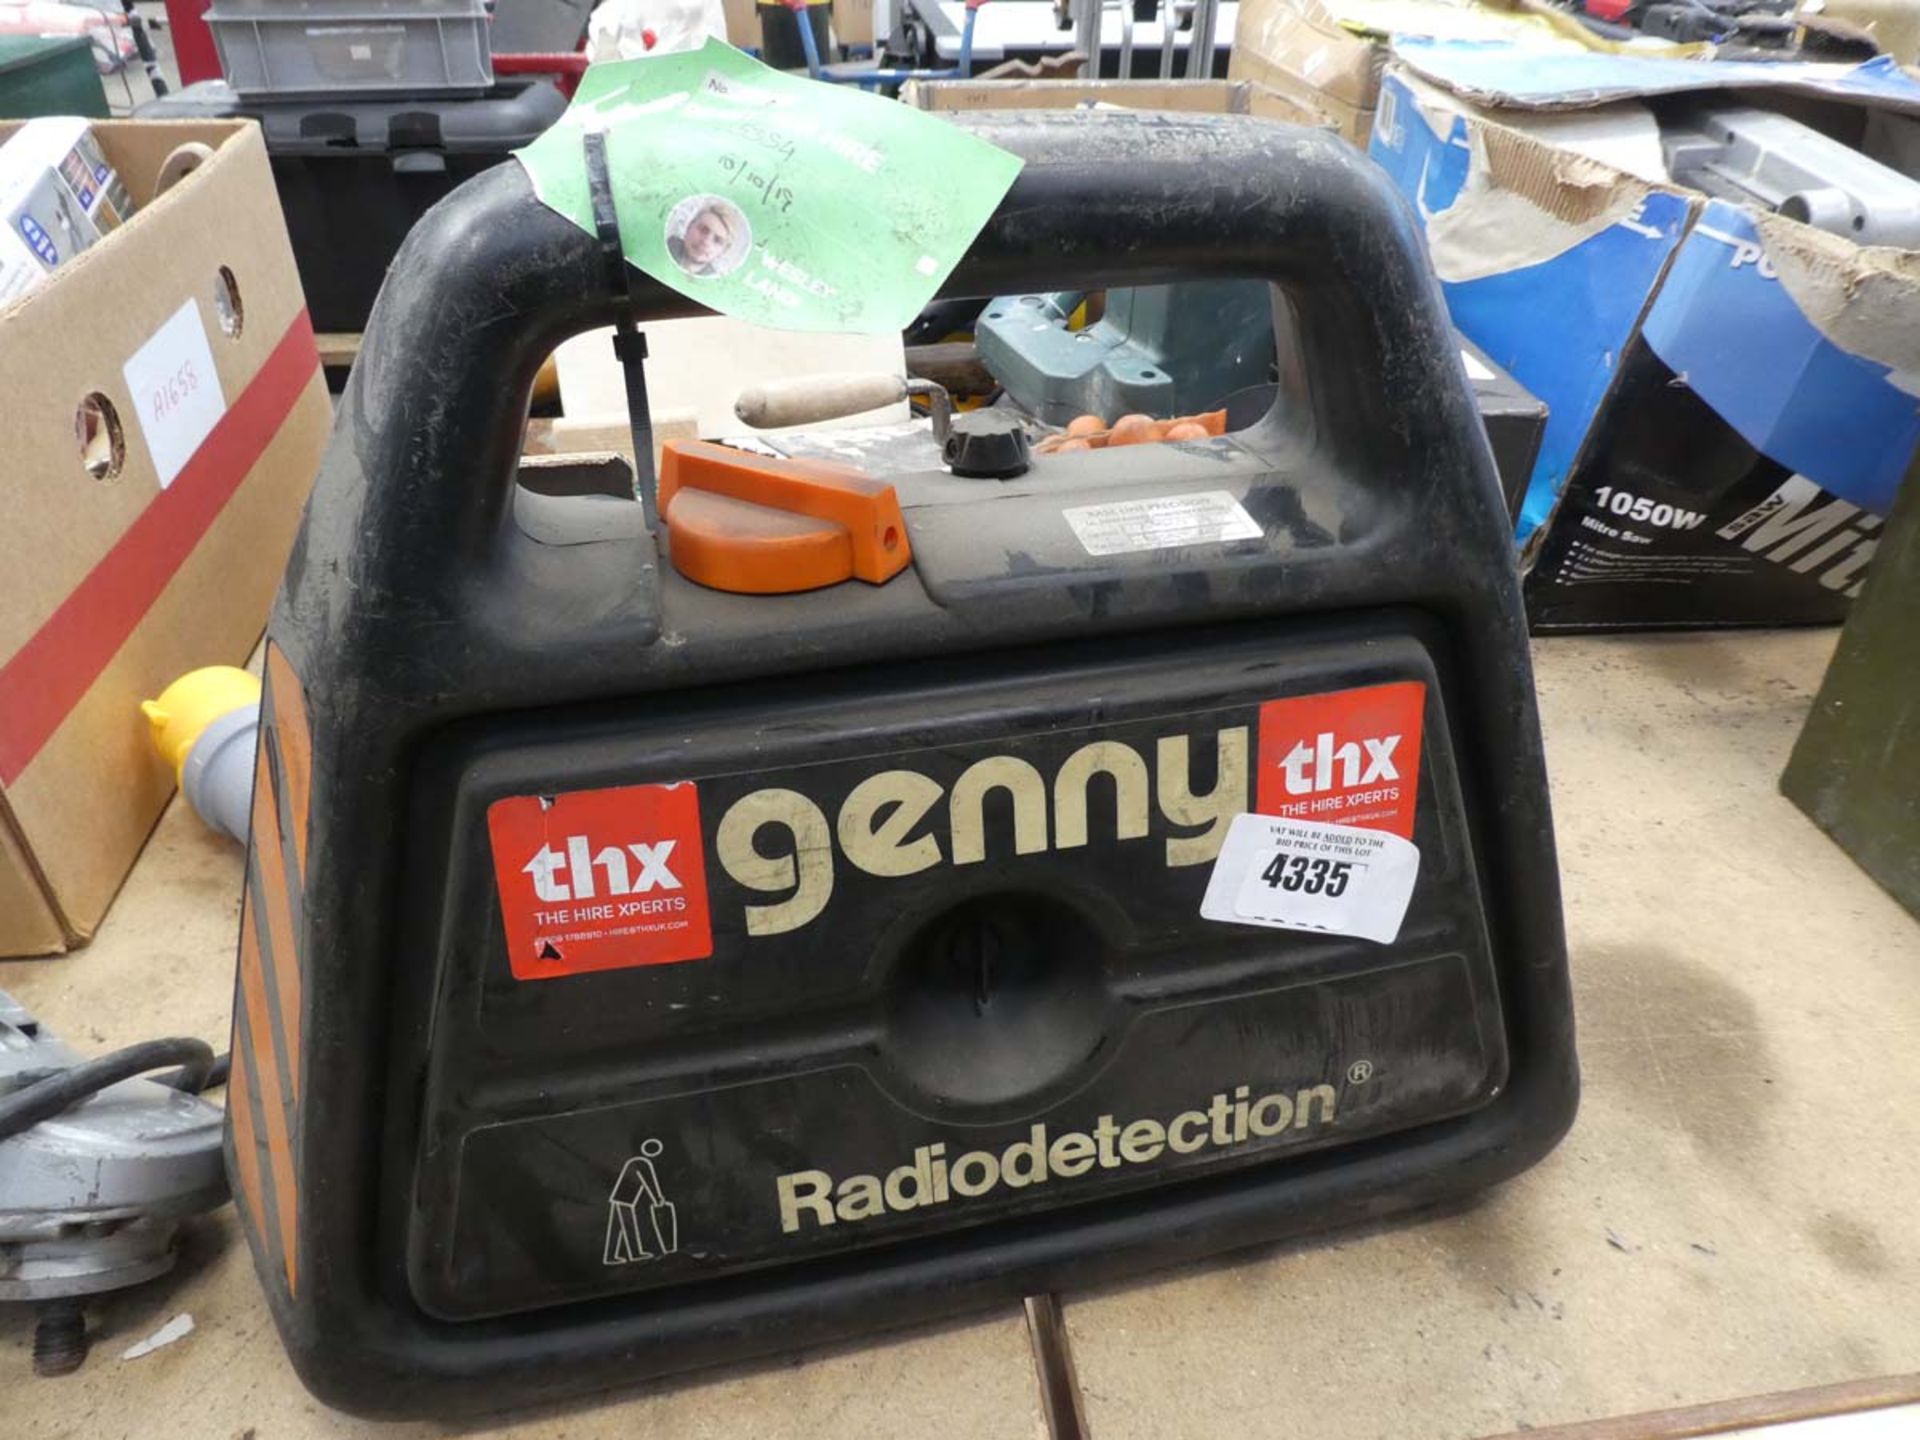 Genny radio detection device